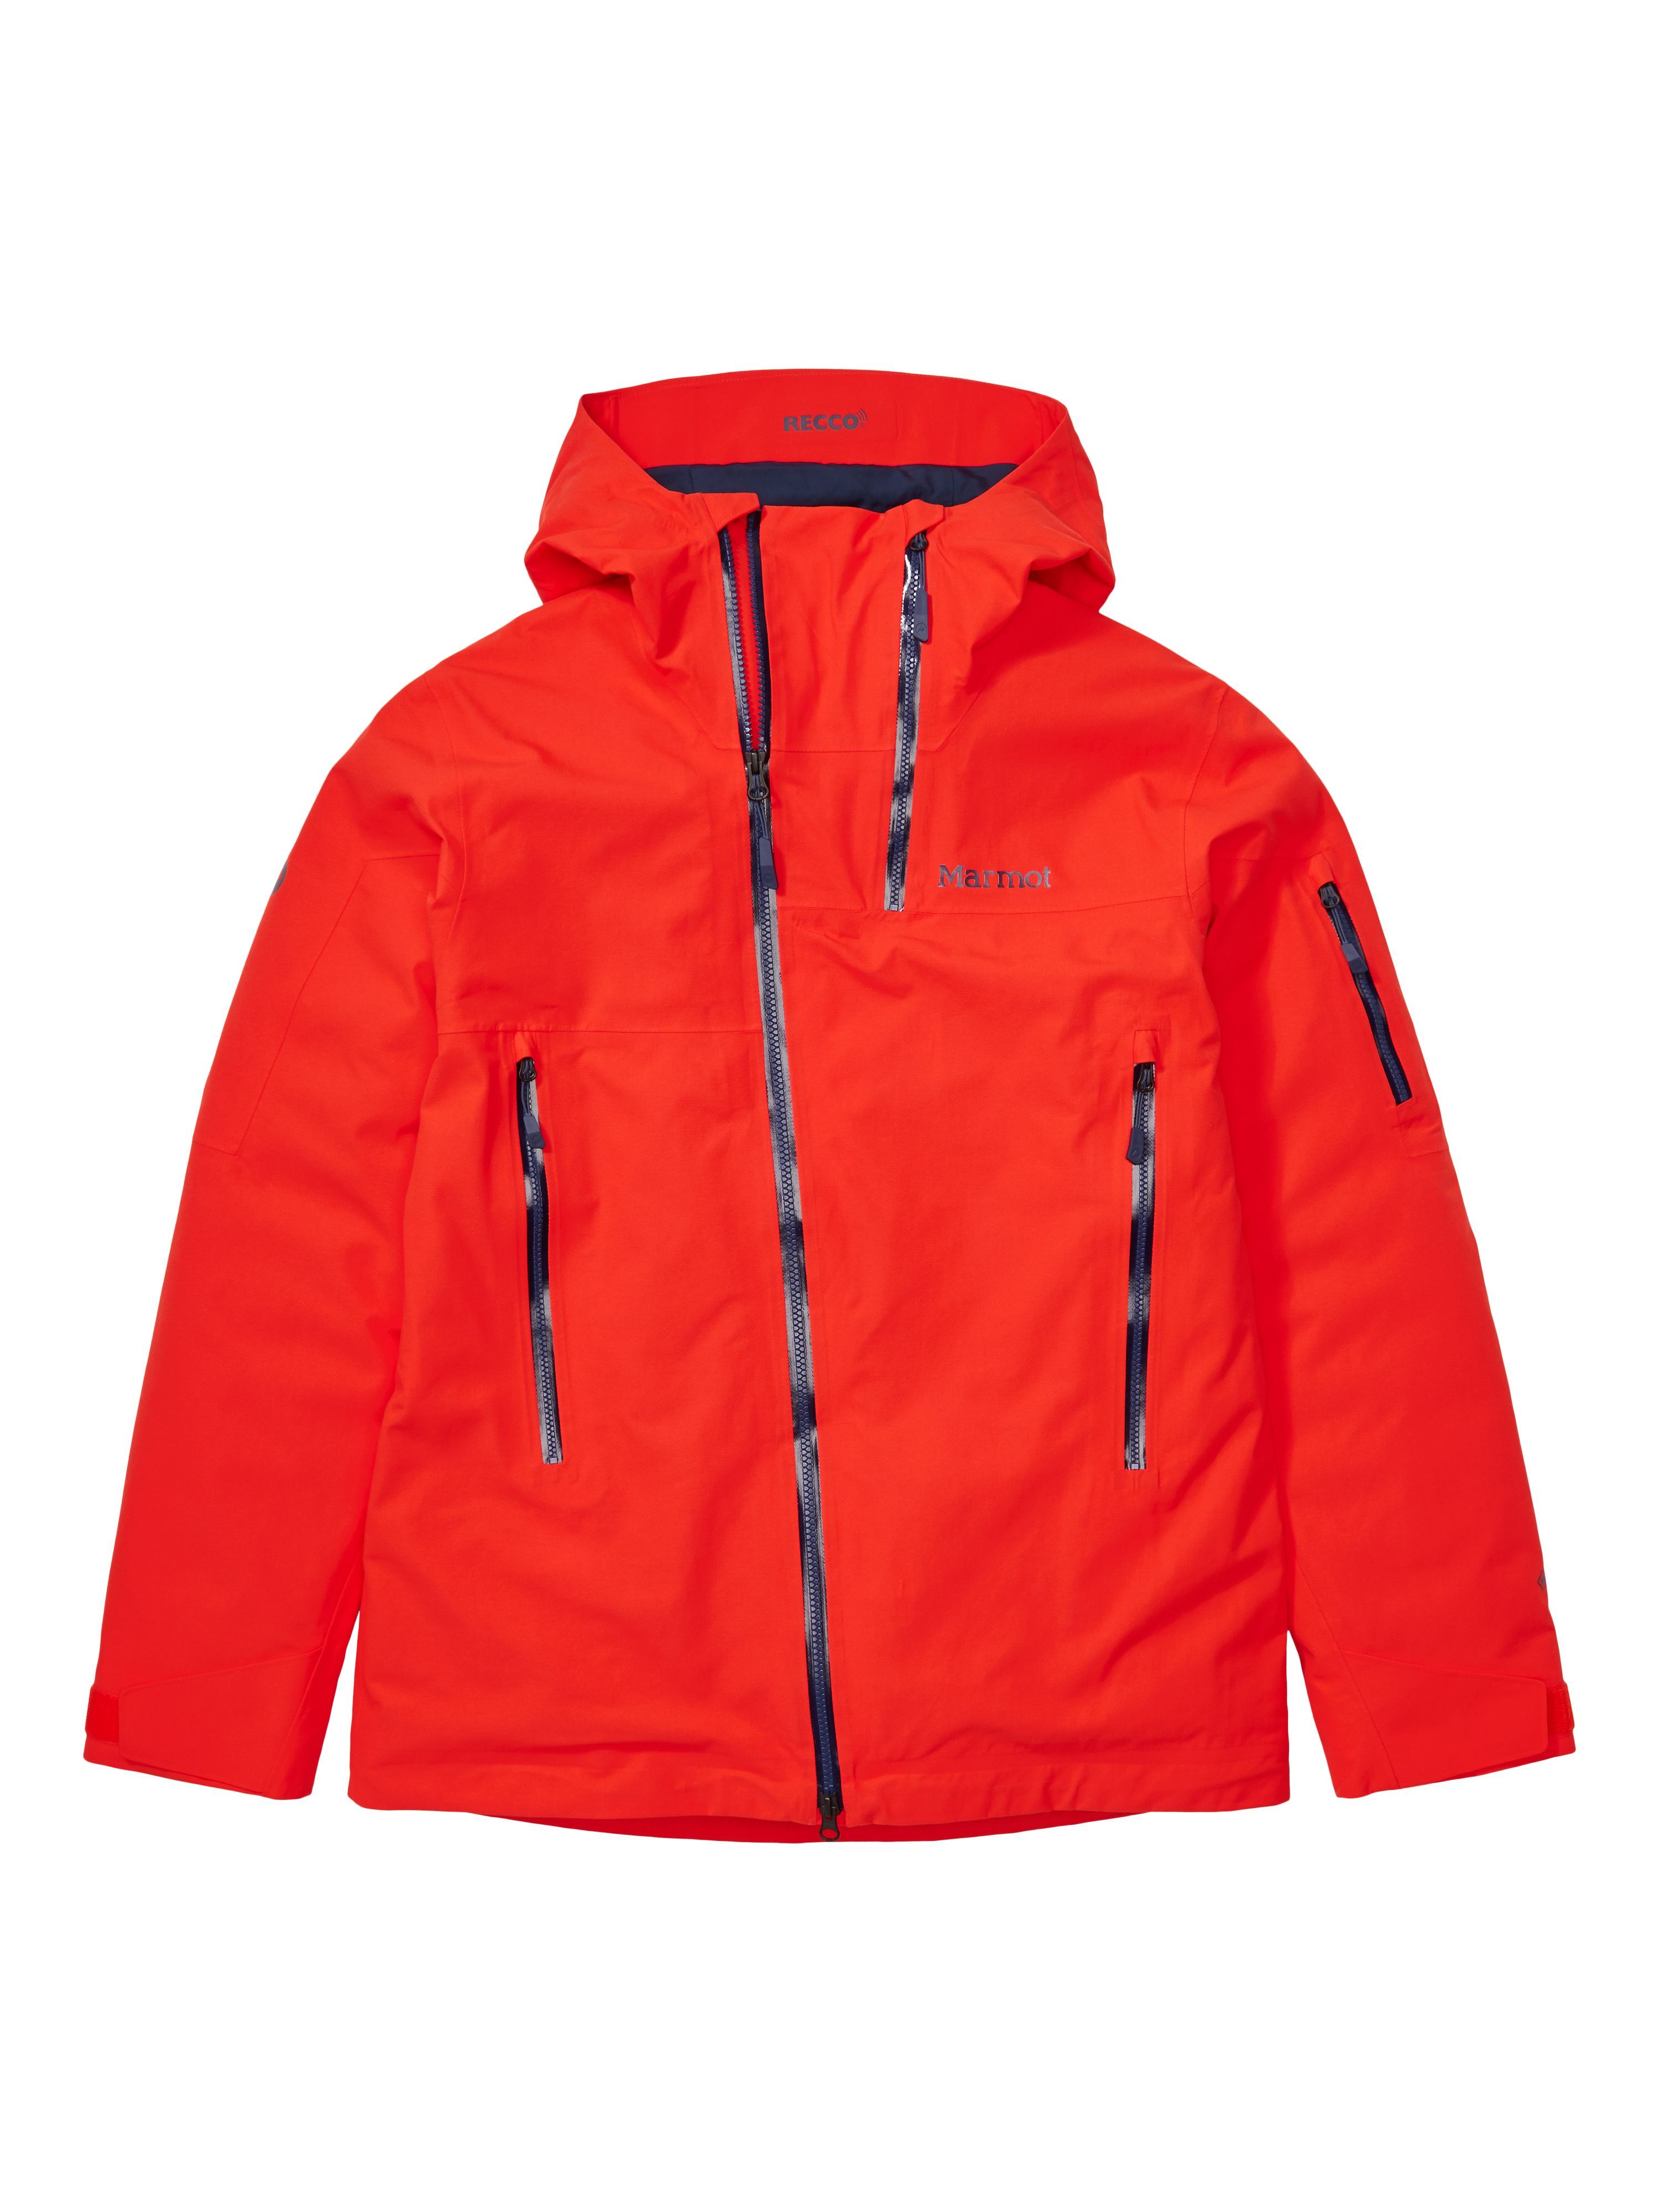 Marmot Freerider Jacket - Ski jacket - Men's